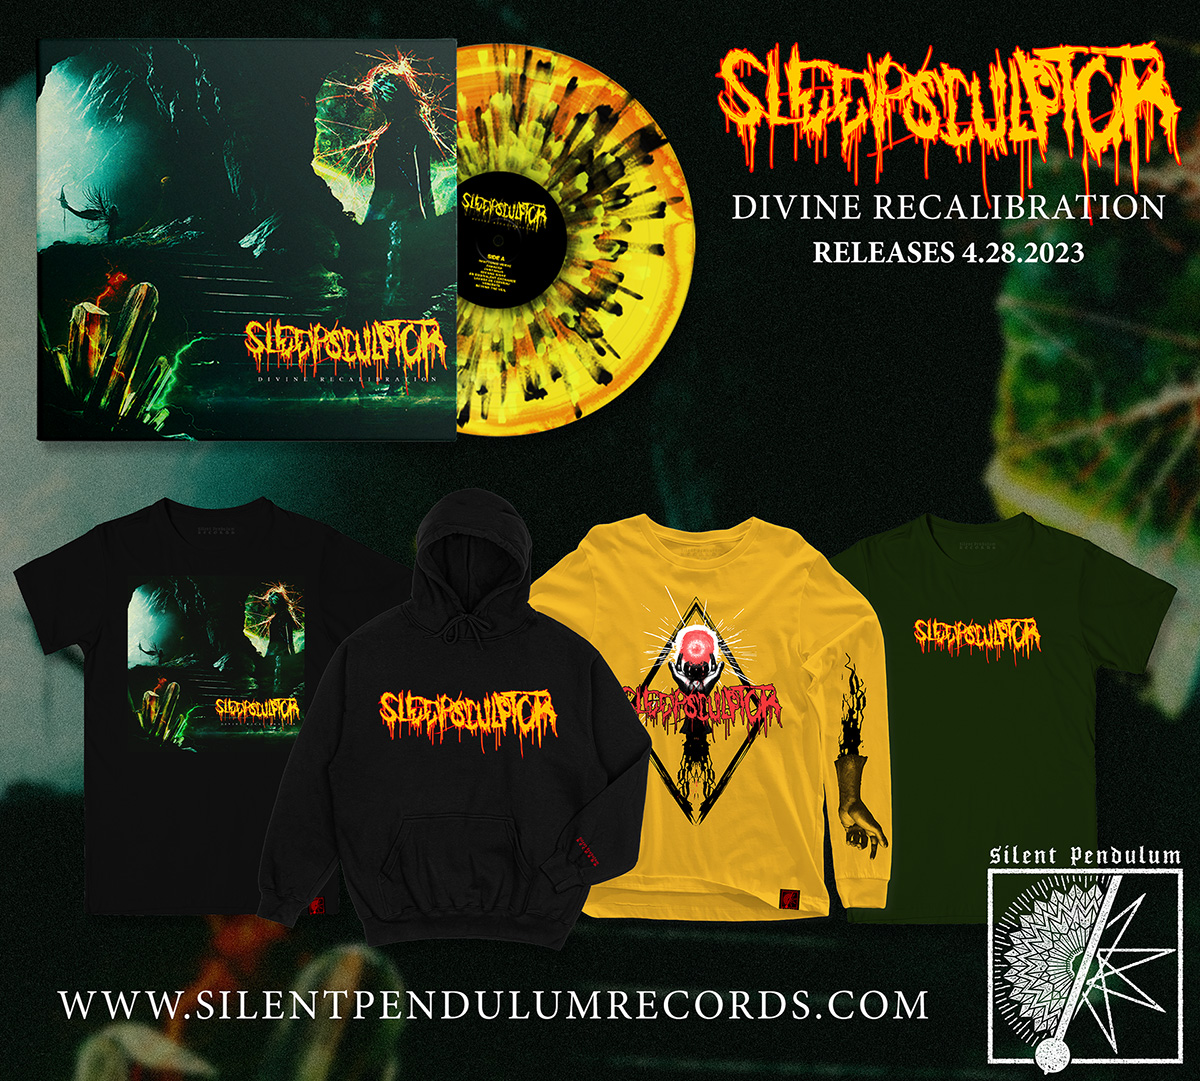 Pre-order Sleepsculptor's album Divine Recalibration on Silent Pendulum Records' web store.